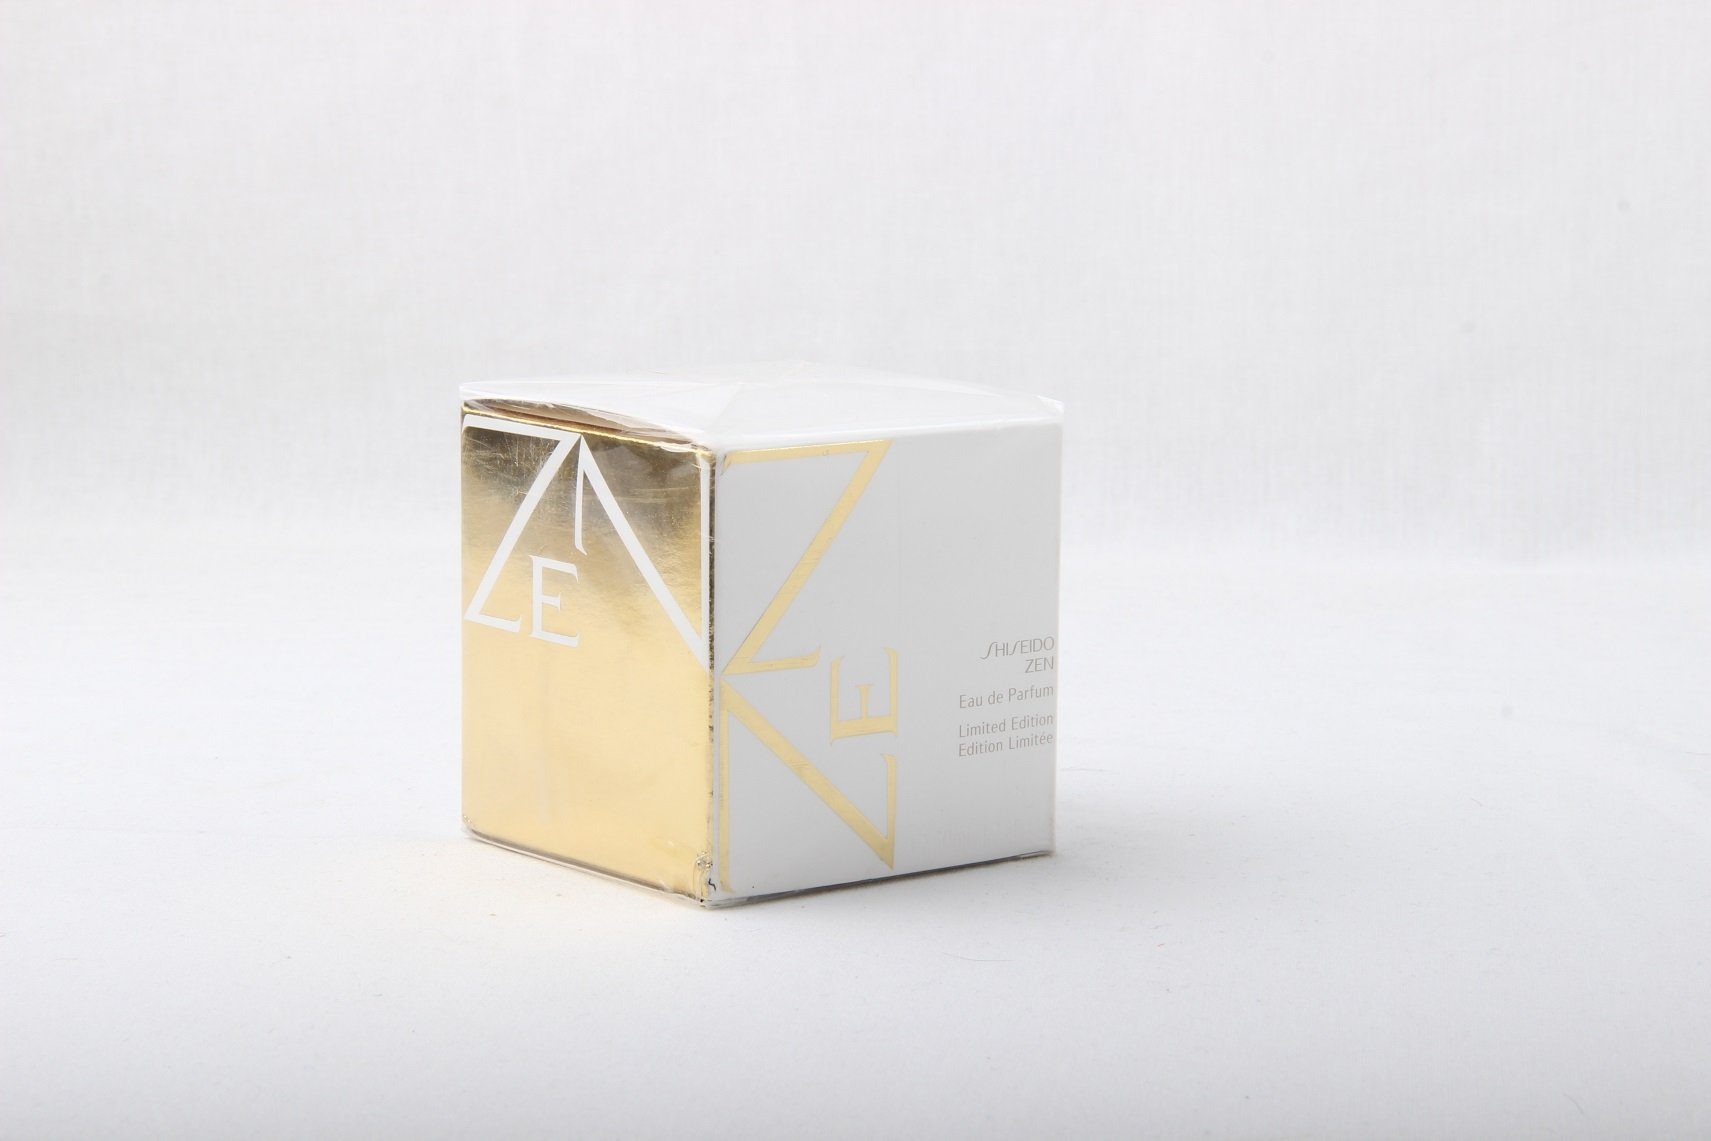 SHISEIDO Eau de Parfum Shiseido Zen Eau de parfum Limited Edition 50ml